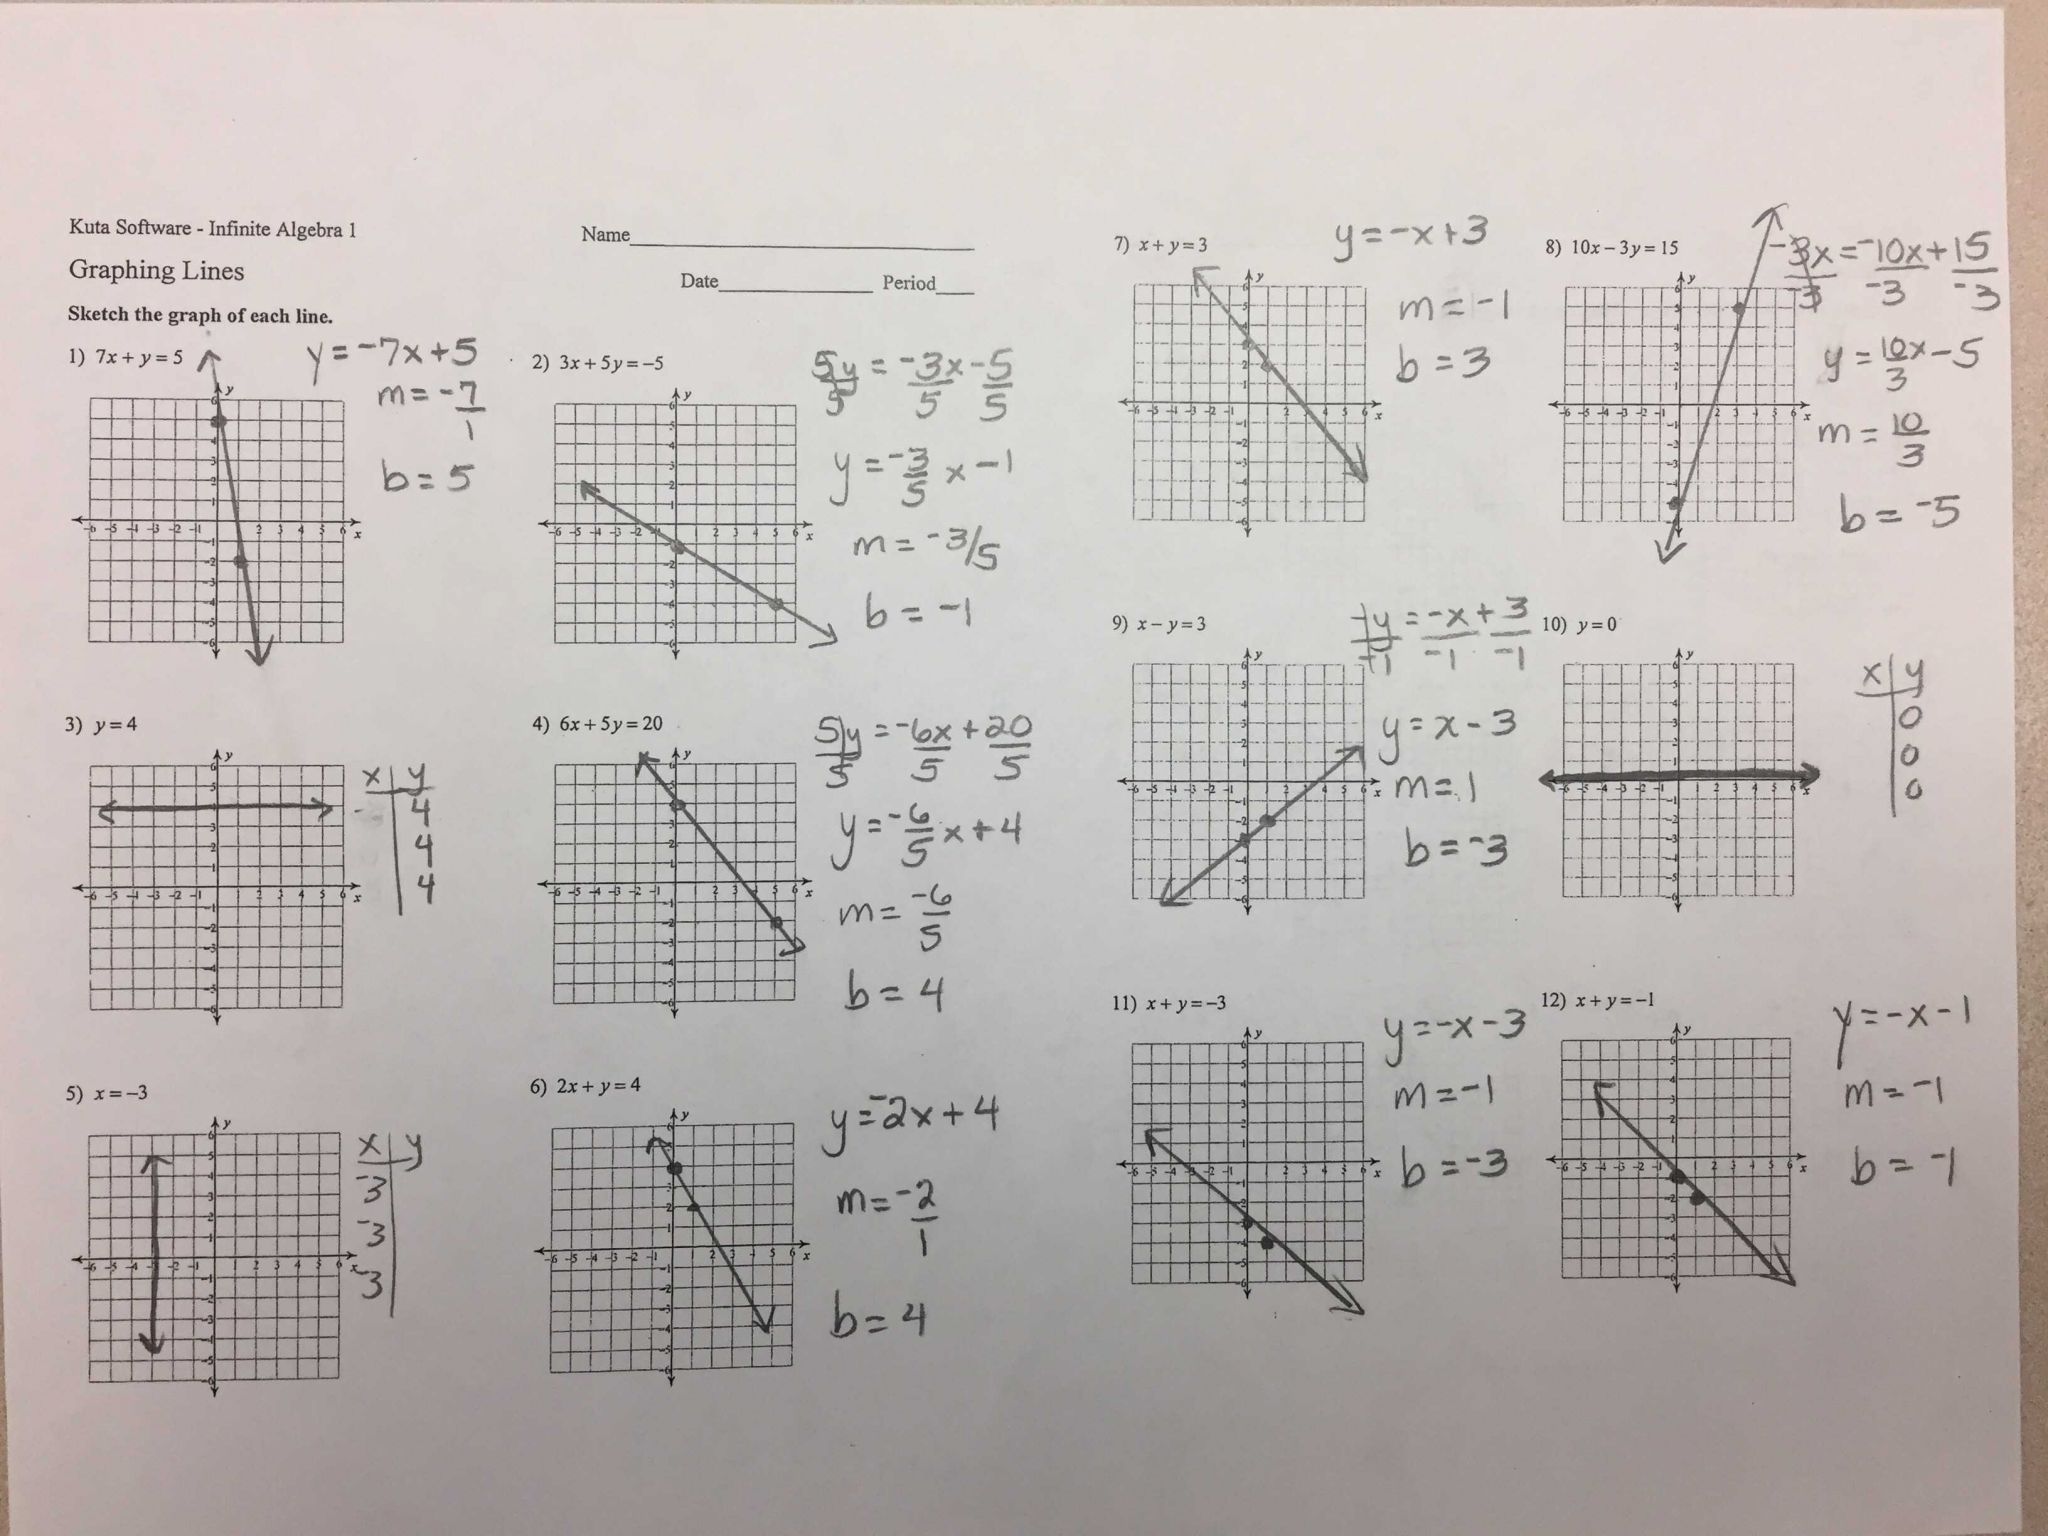 Simplifying Algebraic Expressions Worksheet Answers Along with Translate Algebraic Expressions Worksheet with Answers Awesome 84